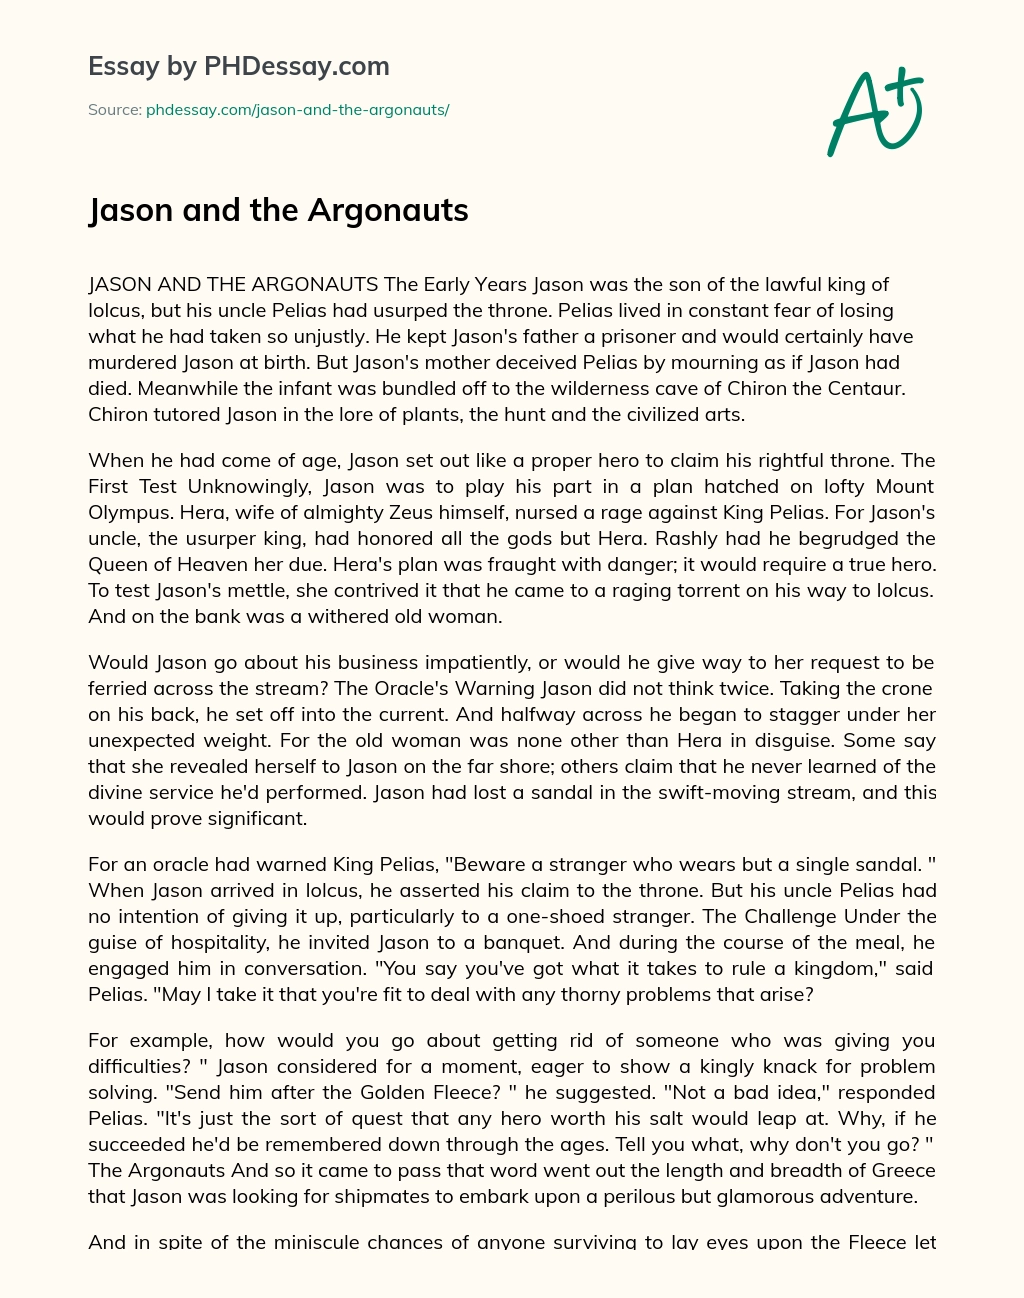 Jason and the Argonauts essay